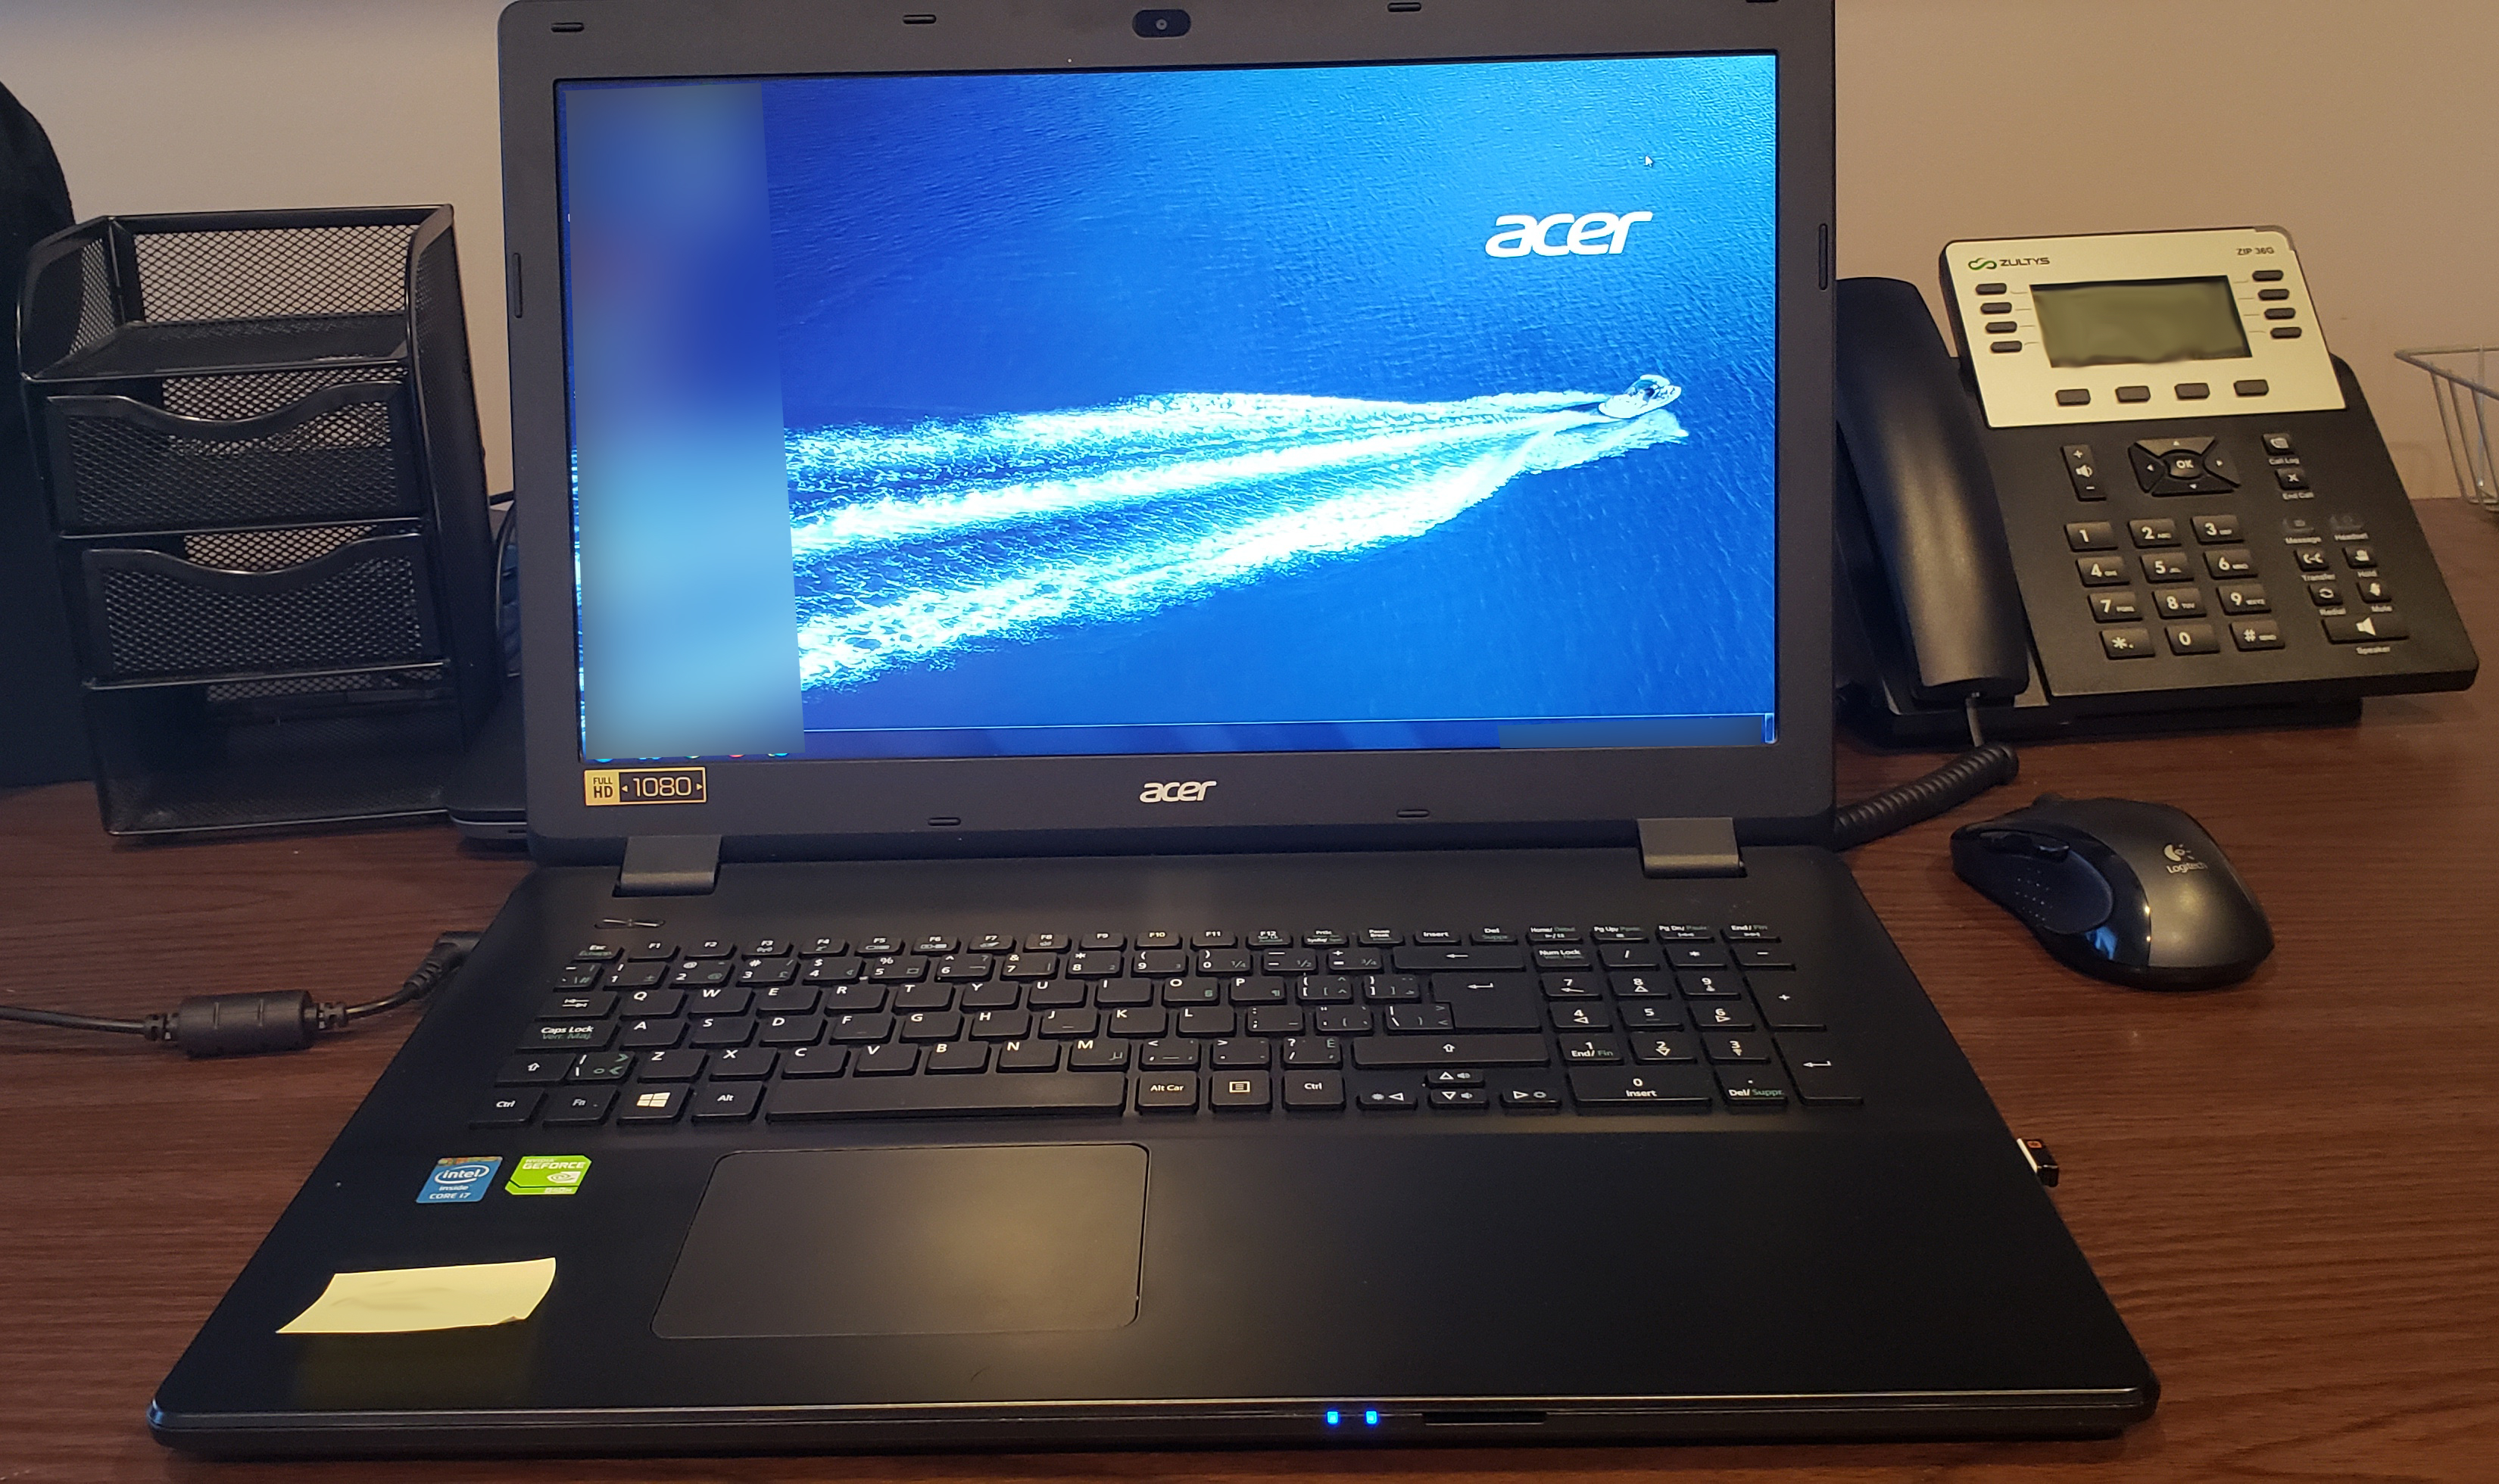 Windows 10 upgrades on Acer laptop